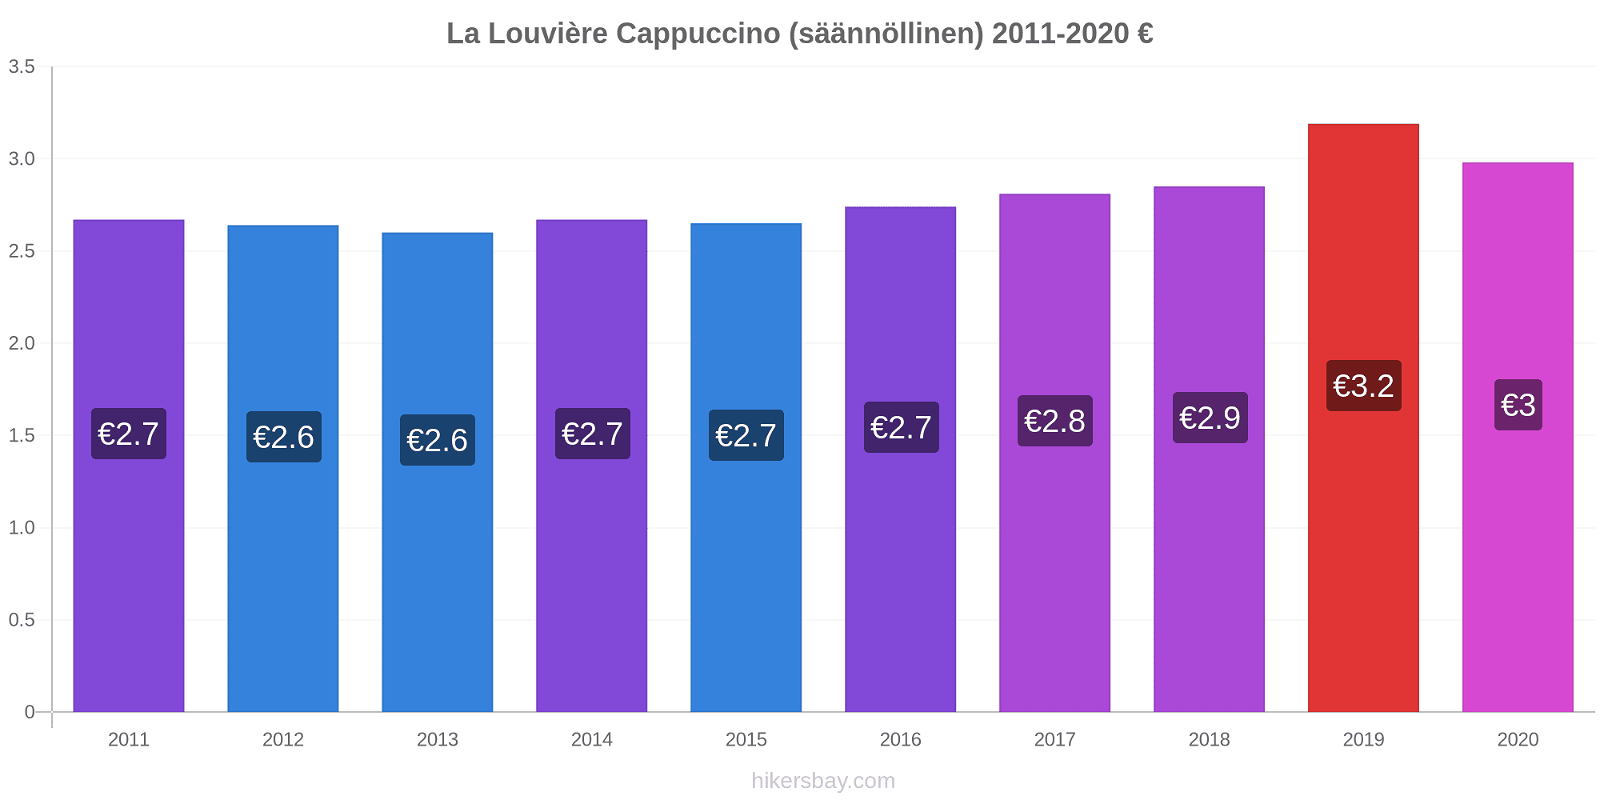 La Louvière hintojen muutokset Cappuccino (säännöllinen) hikersbay.com